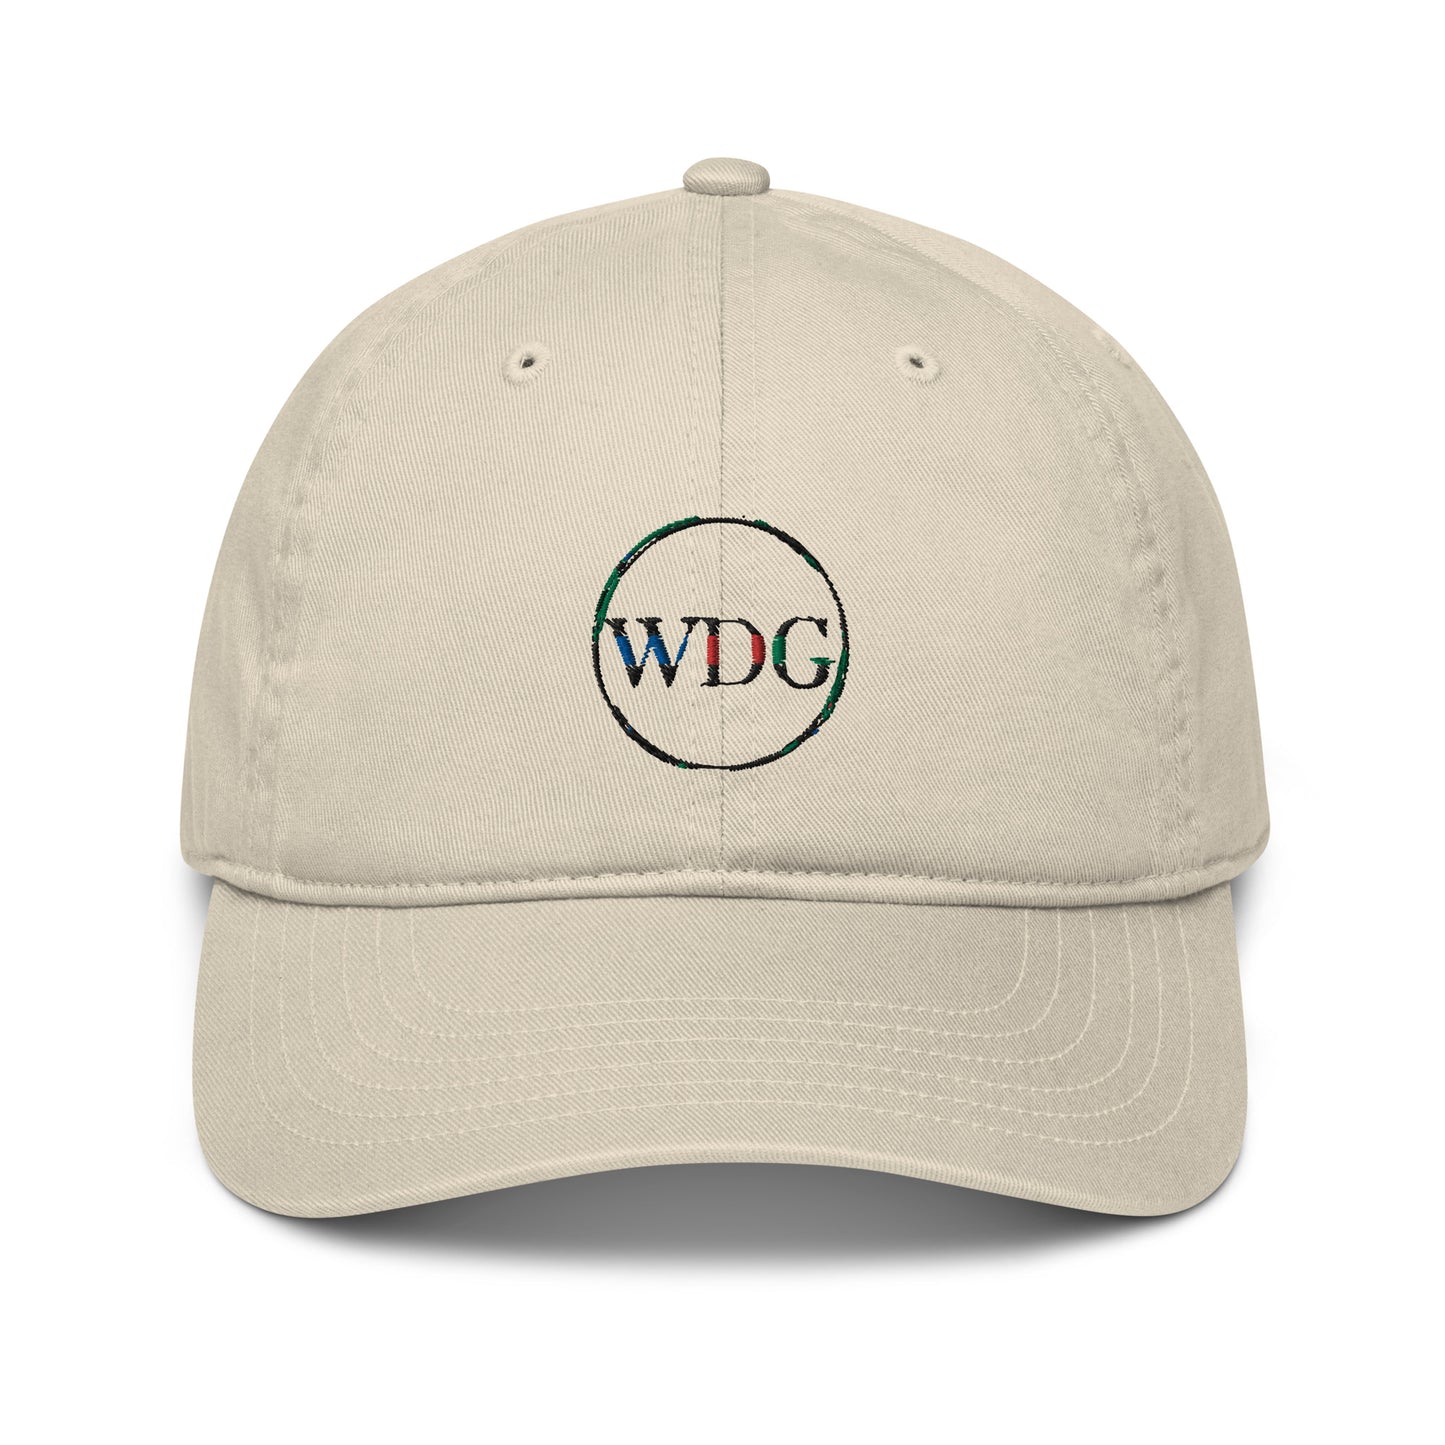 Organic dad hat